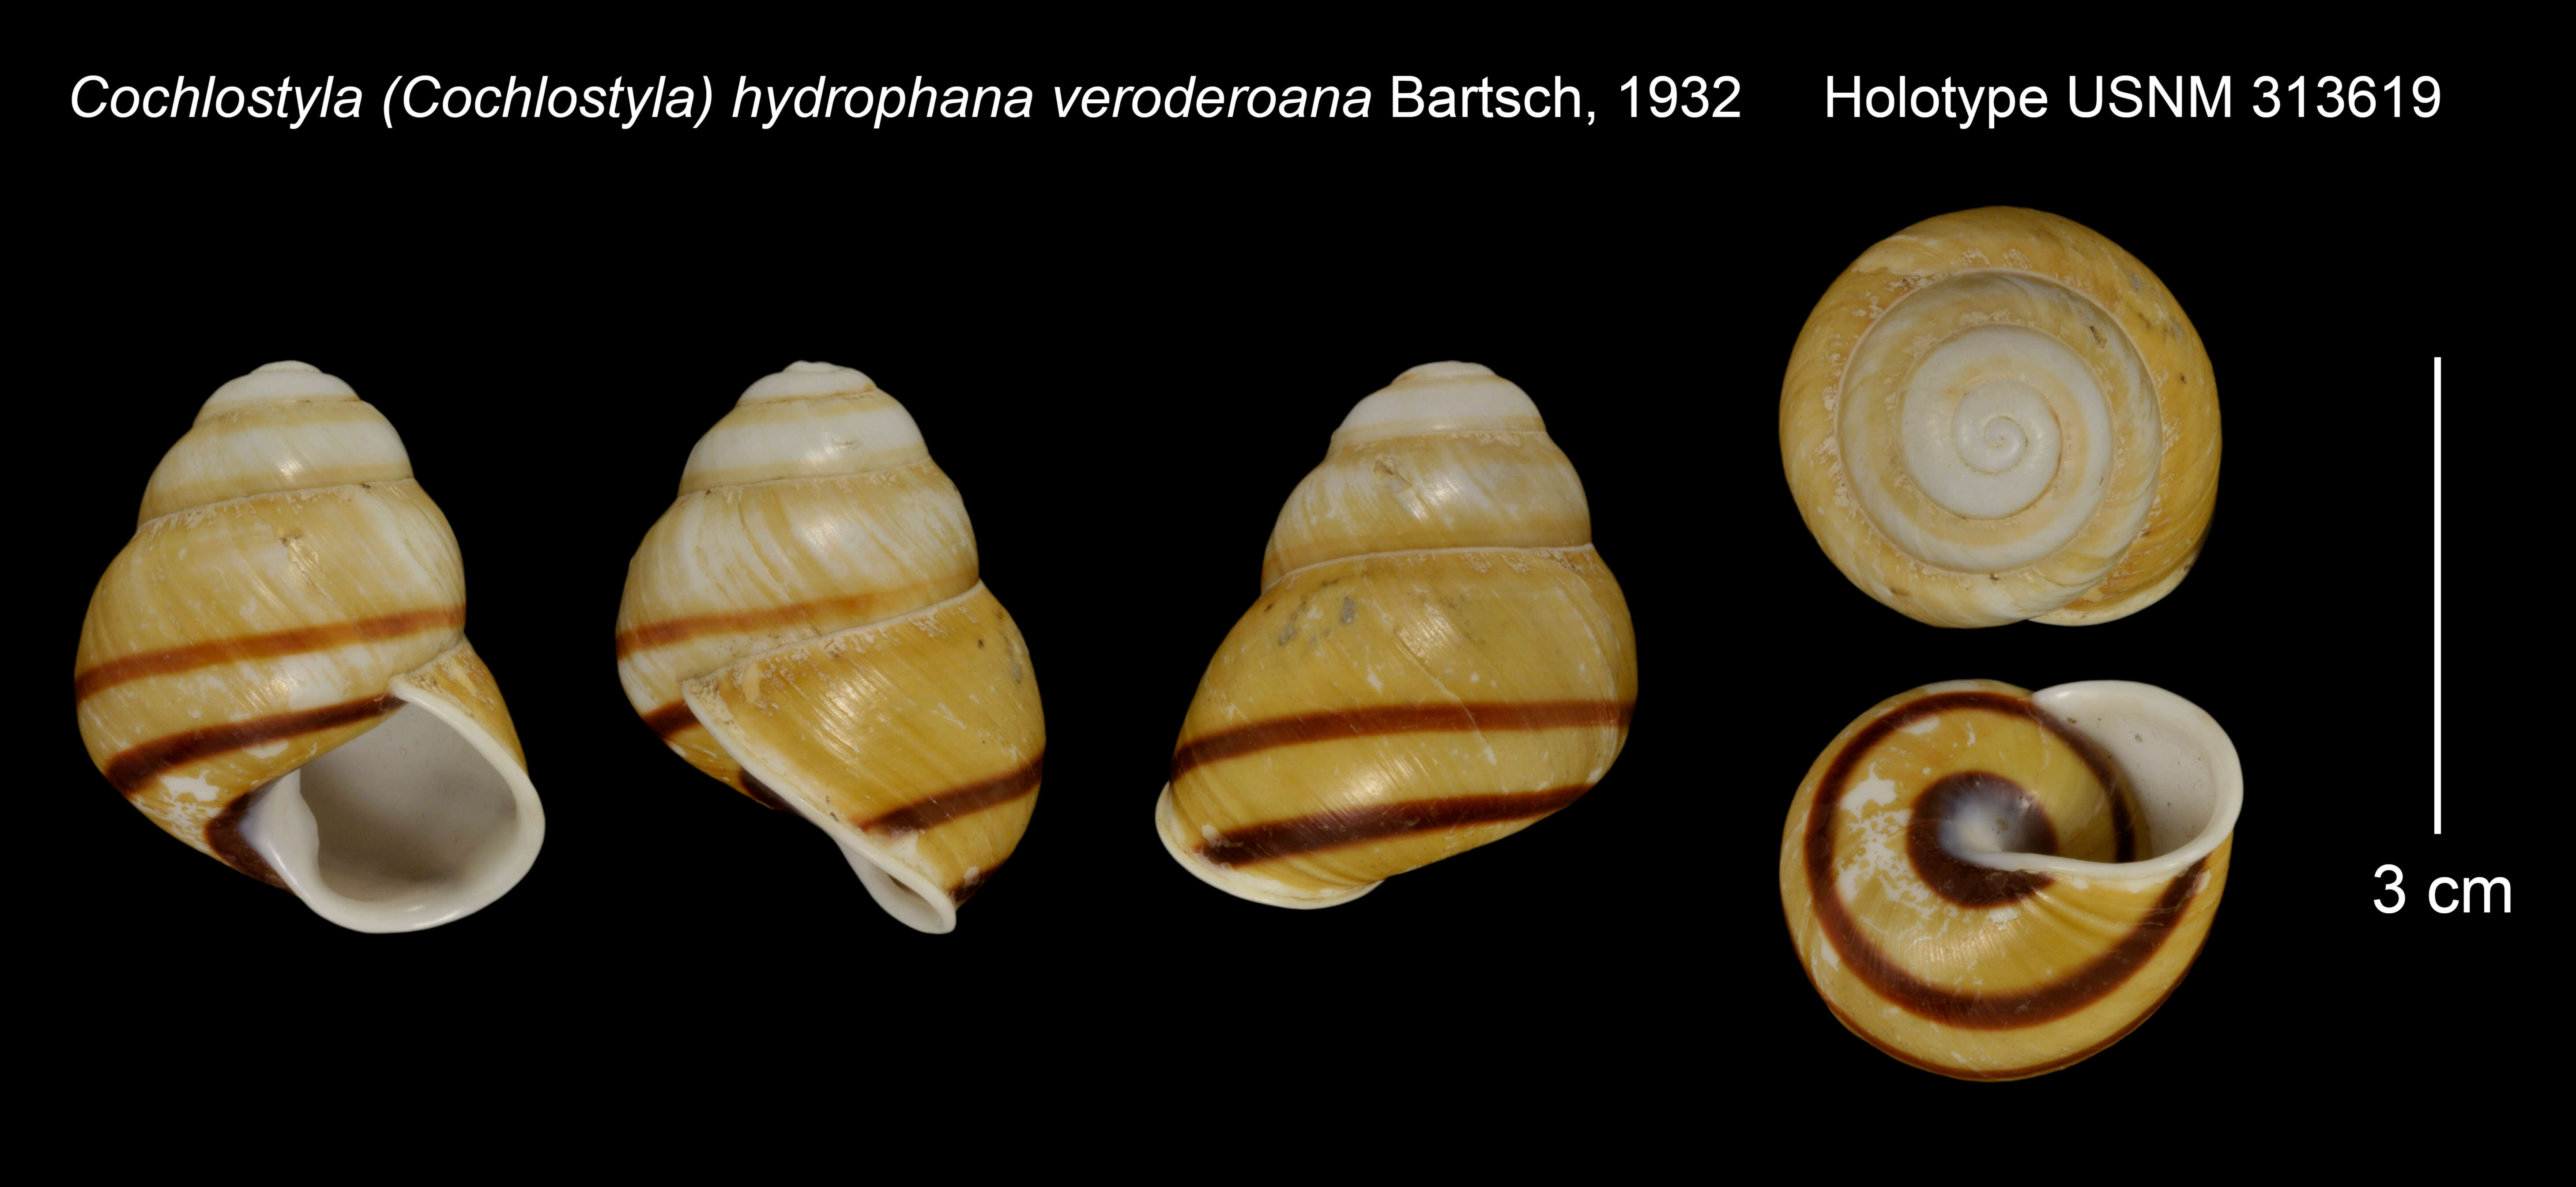 Image of Cochlostyla (Cochlostyla) hydrophana veroderoana Bartsch